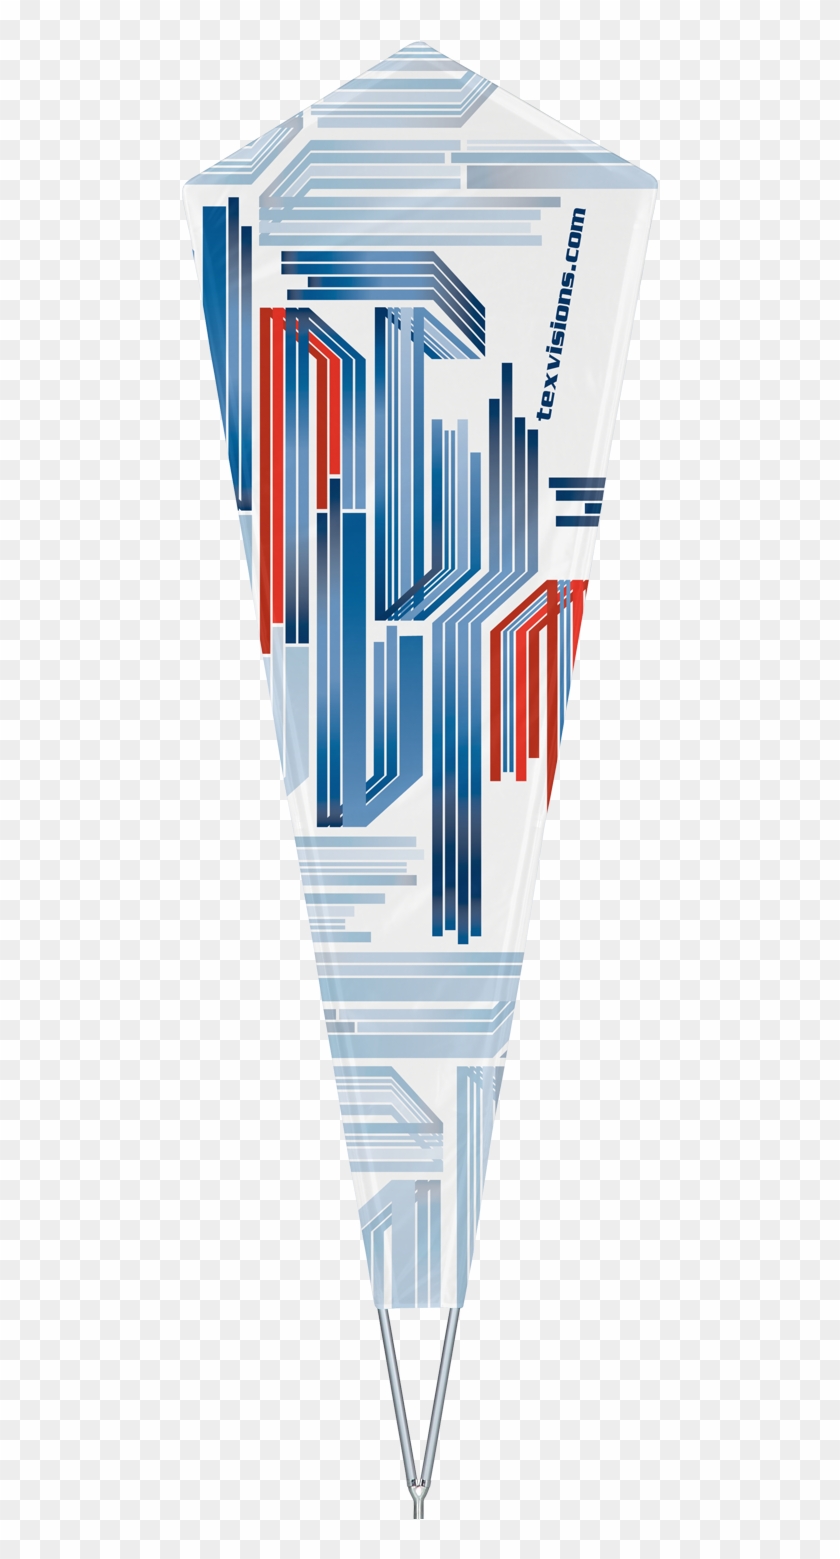 Bowflag® Premium Shield - Illustration Clipart #5709919